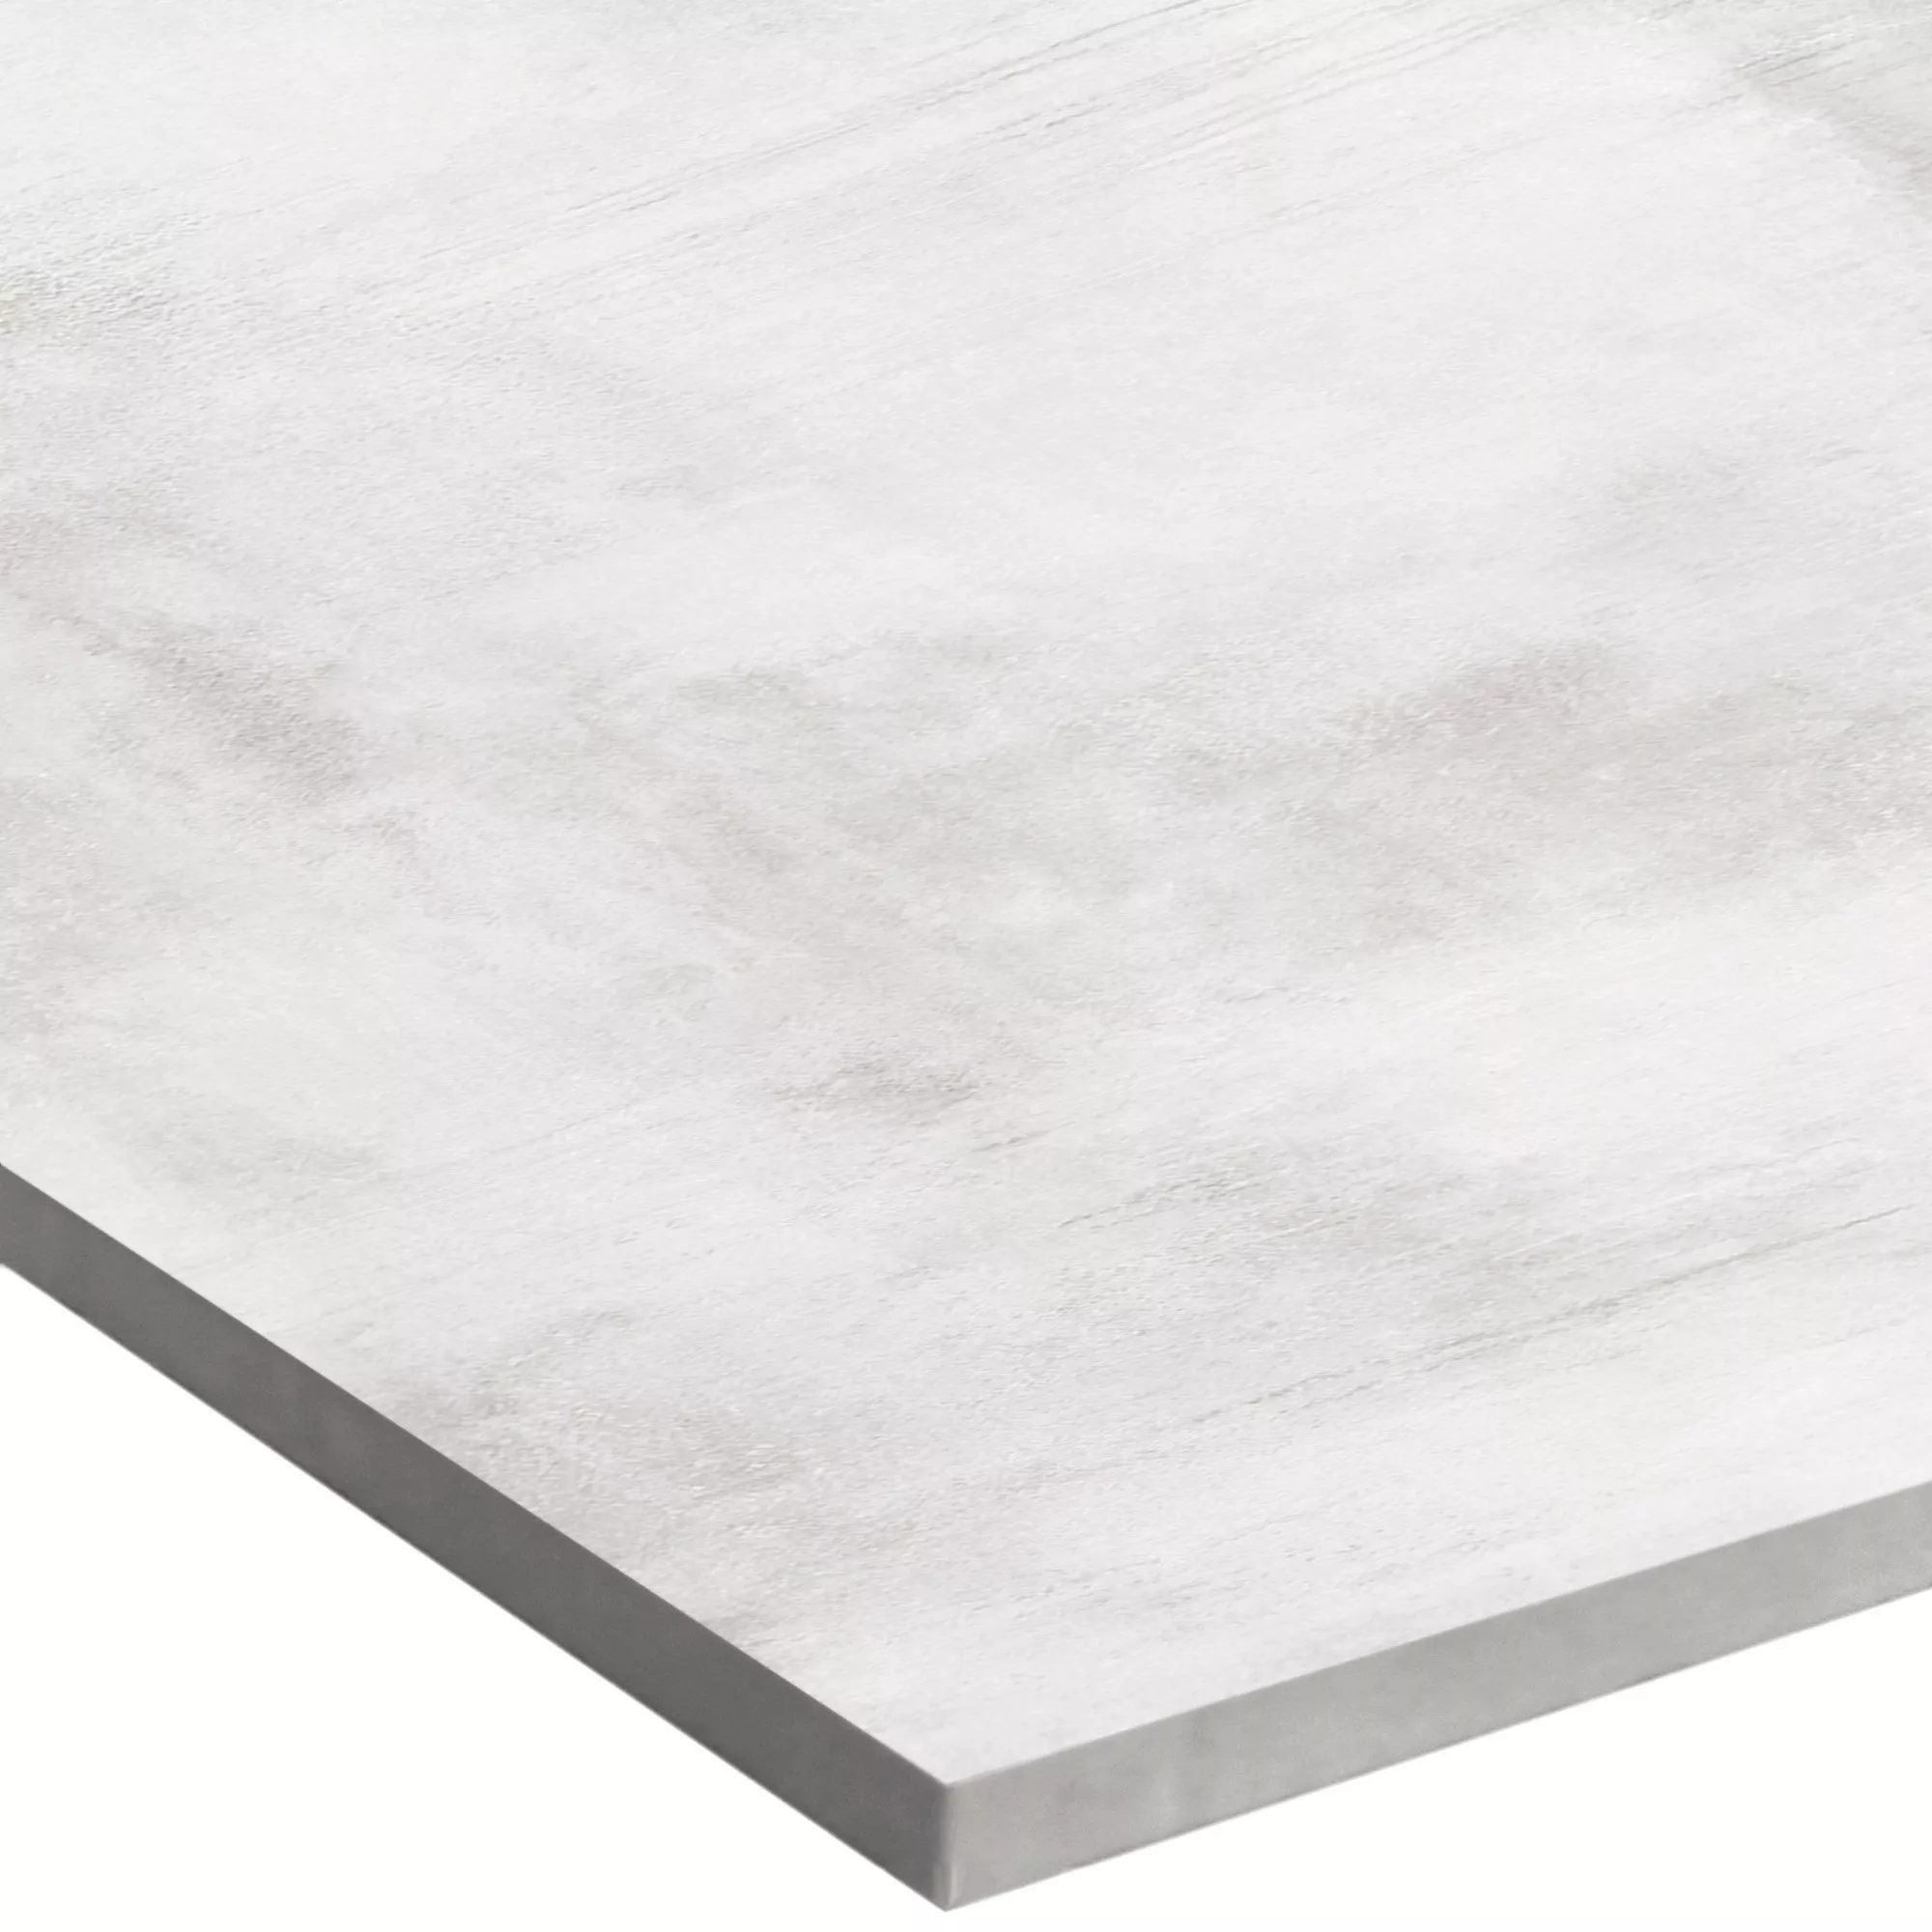 Vzorek Podlahové Dlaždice Tycoon Betonový Vzhled R10 Stříbrná 60x60cm